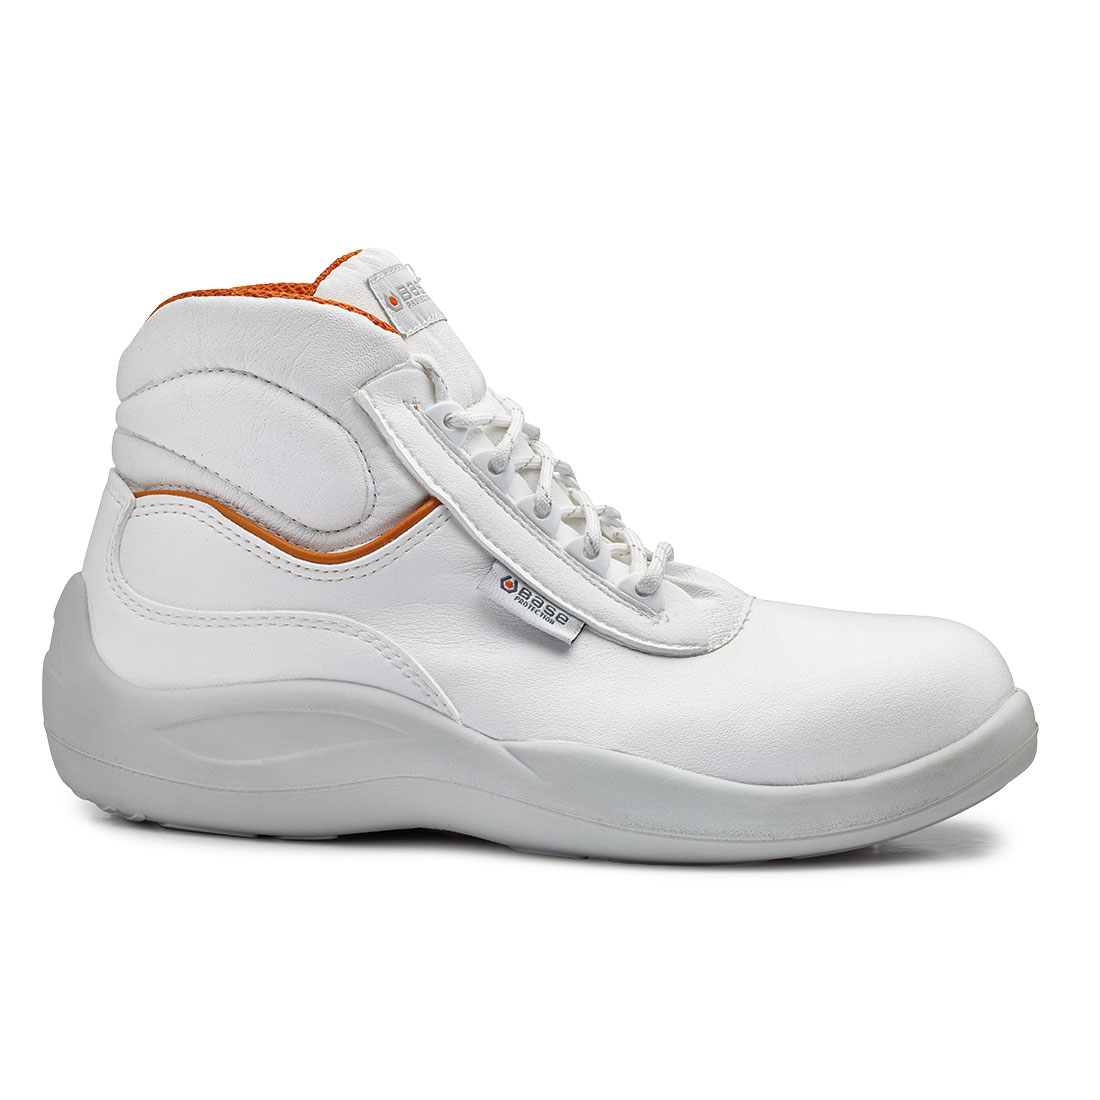 Base Zinco Ankle Shoes White B0502